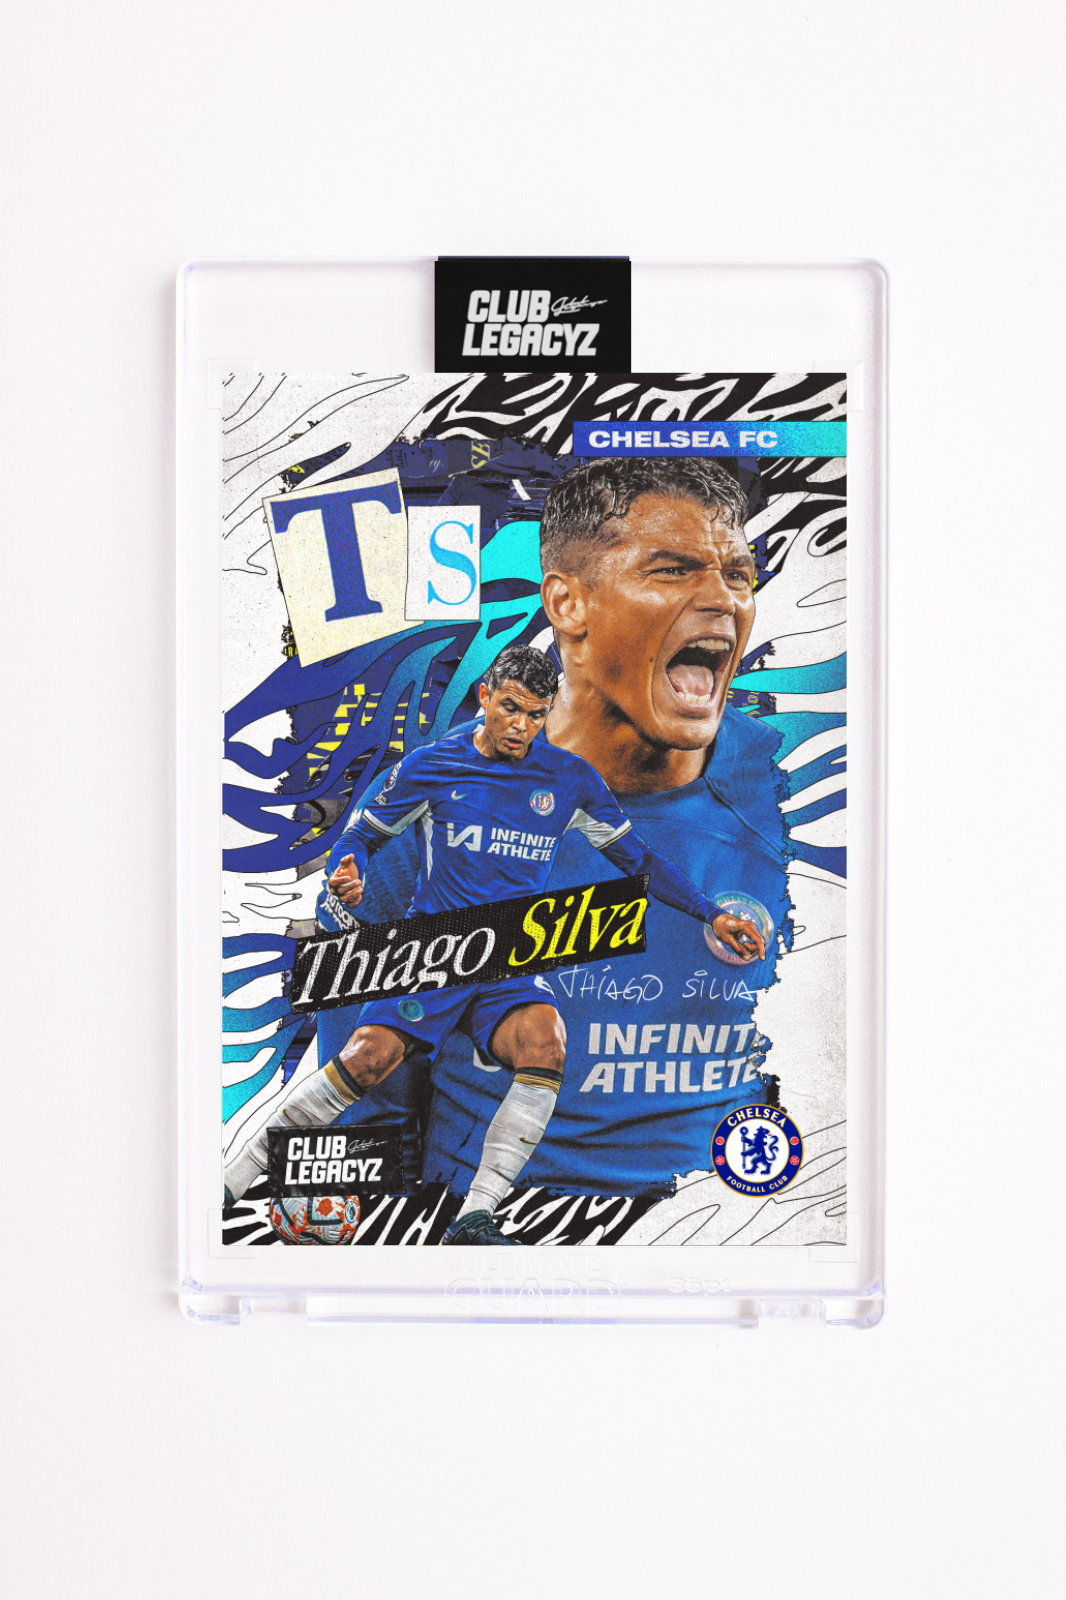 Chelsea FC - Icon Thiago Silva 999 exemplaires